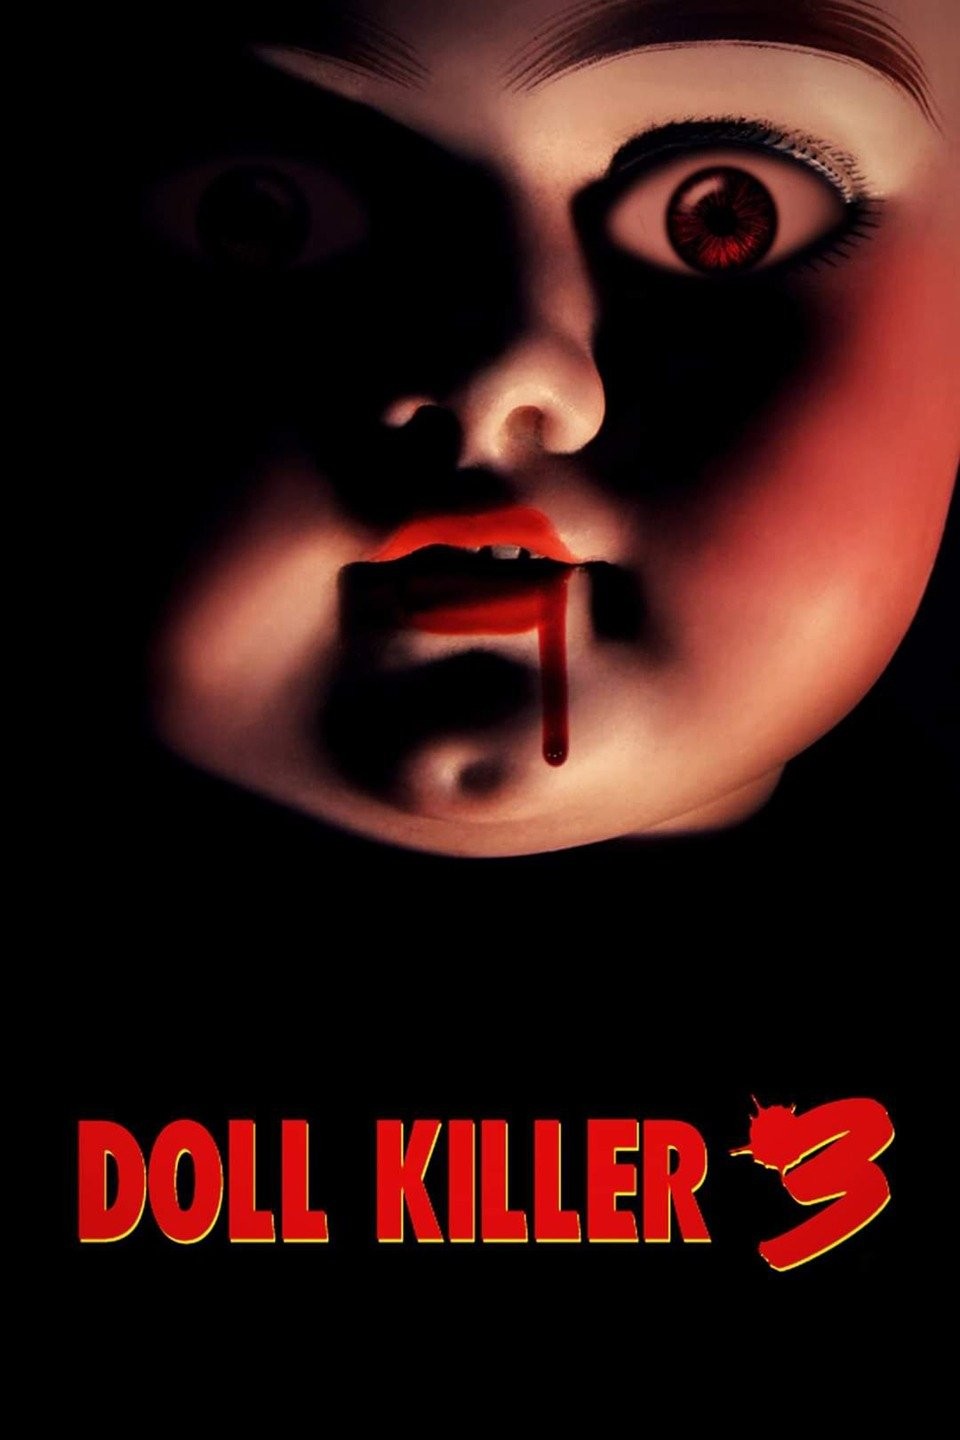 Killing dolls. Doll Killer it takes two.